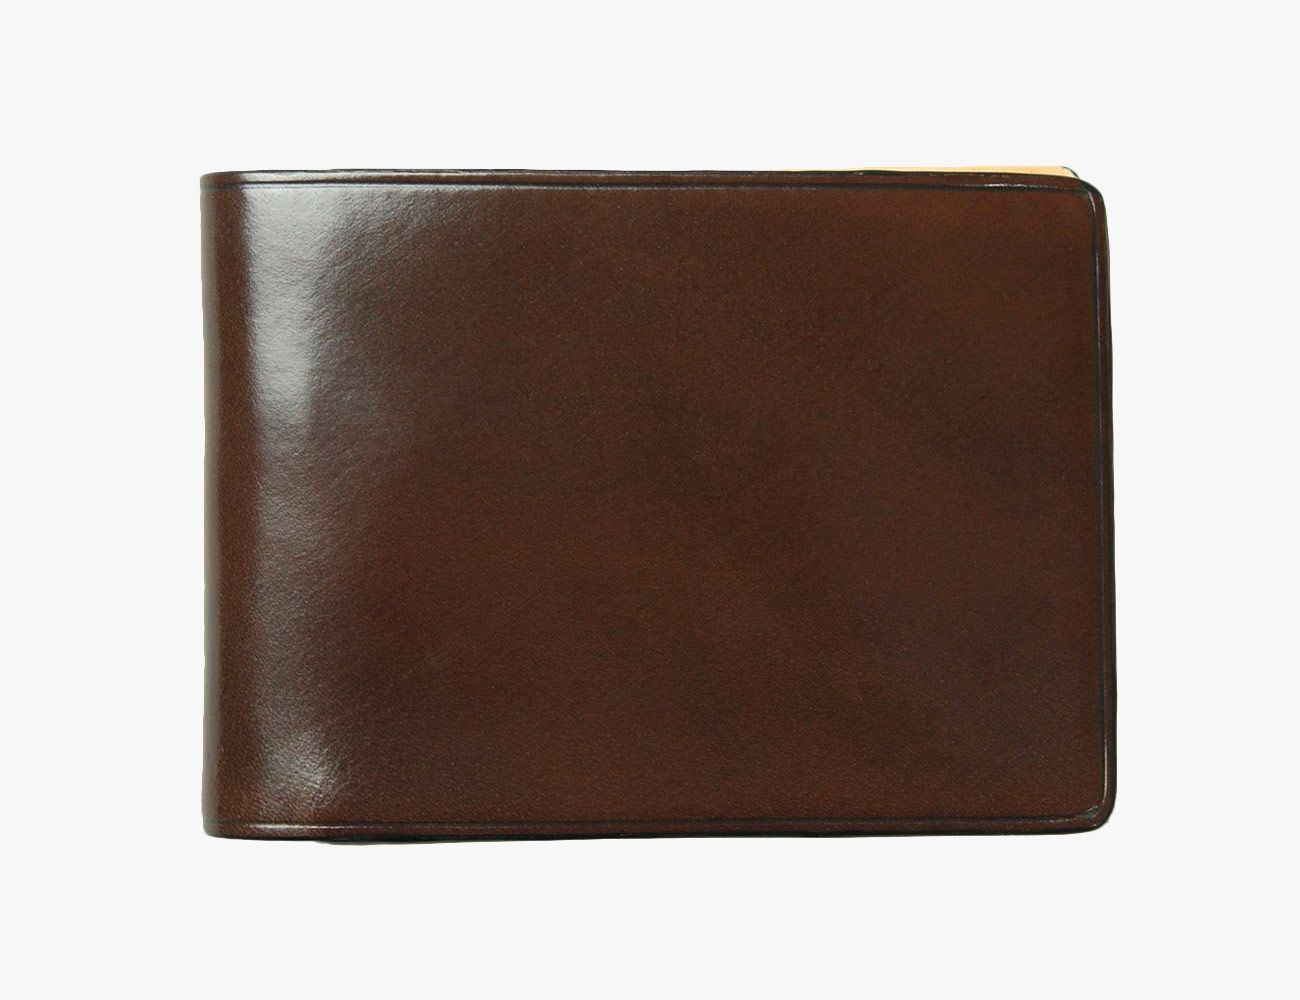 Best Wallets for Men, Mens Leather Wallet, Purse for Men - Zestpics